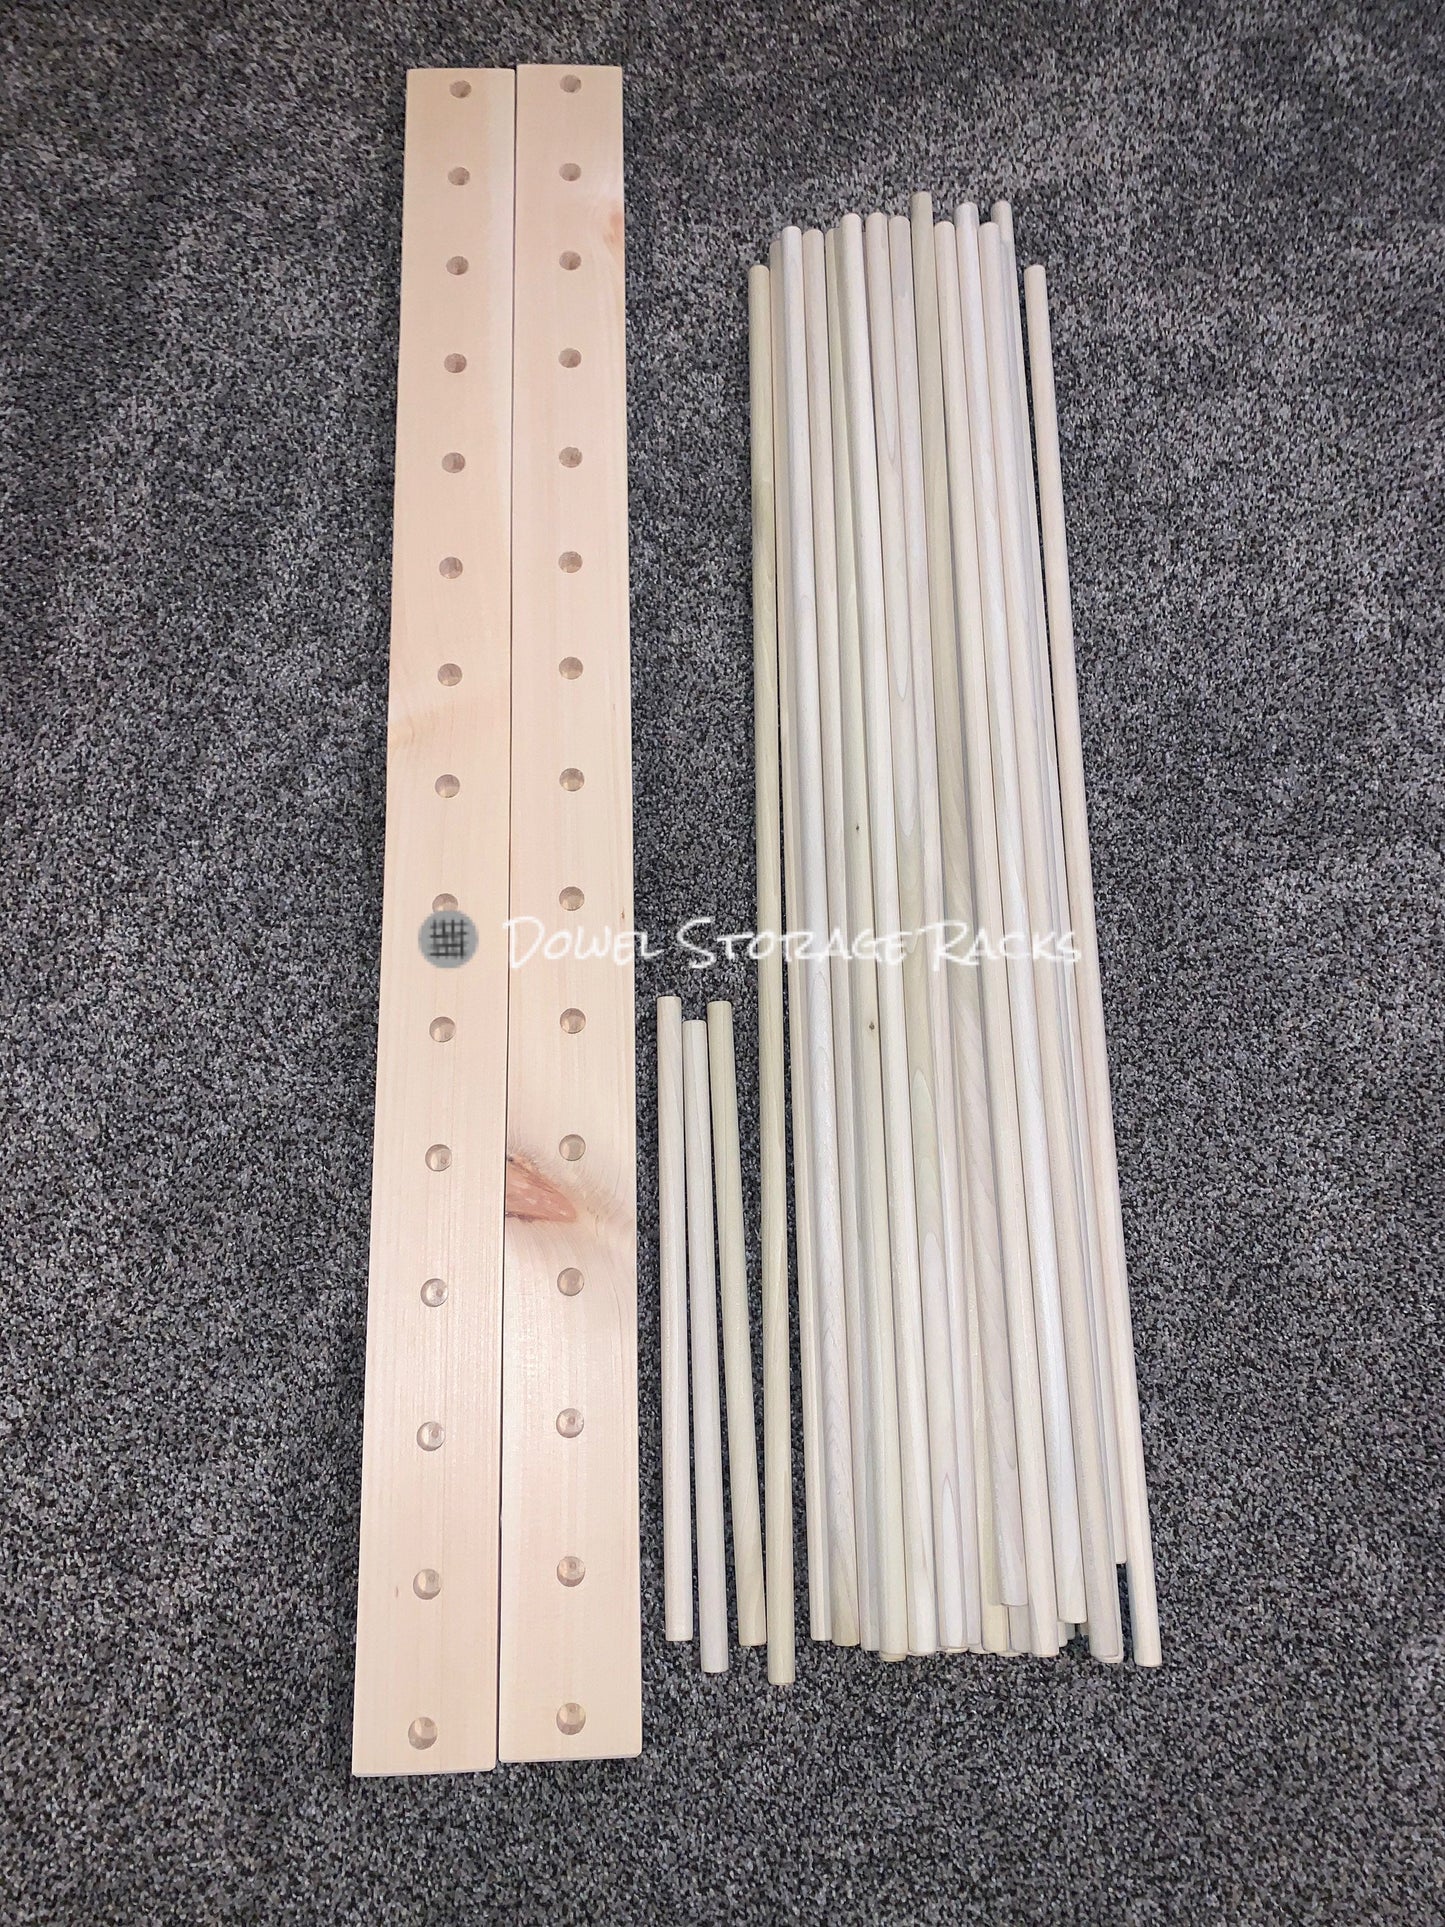 Art Storage Rack - 36” long x 16” wide base w/ 30” tall dowels